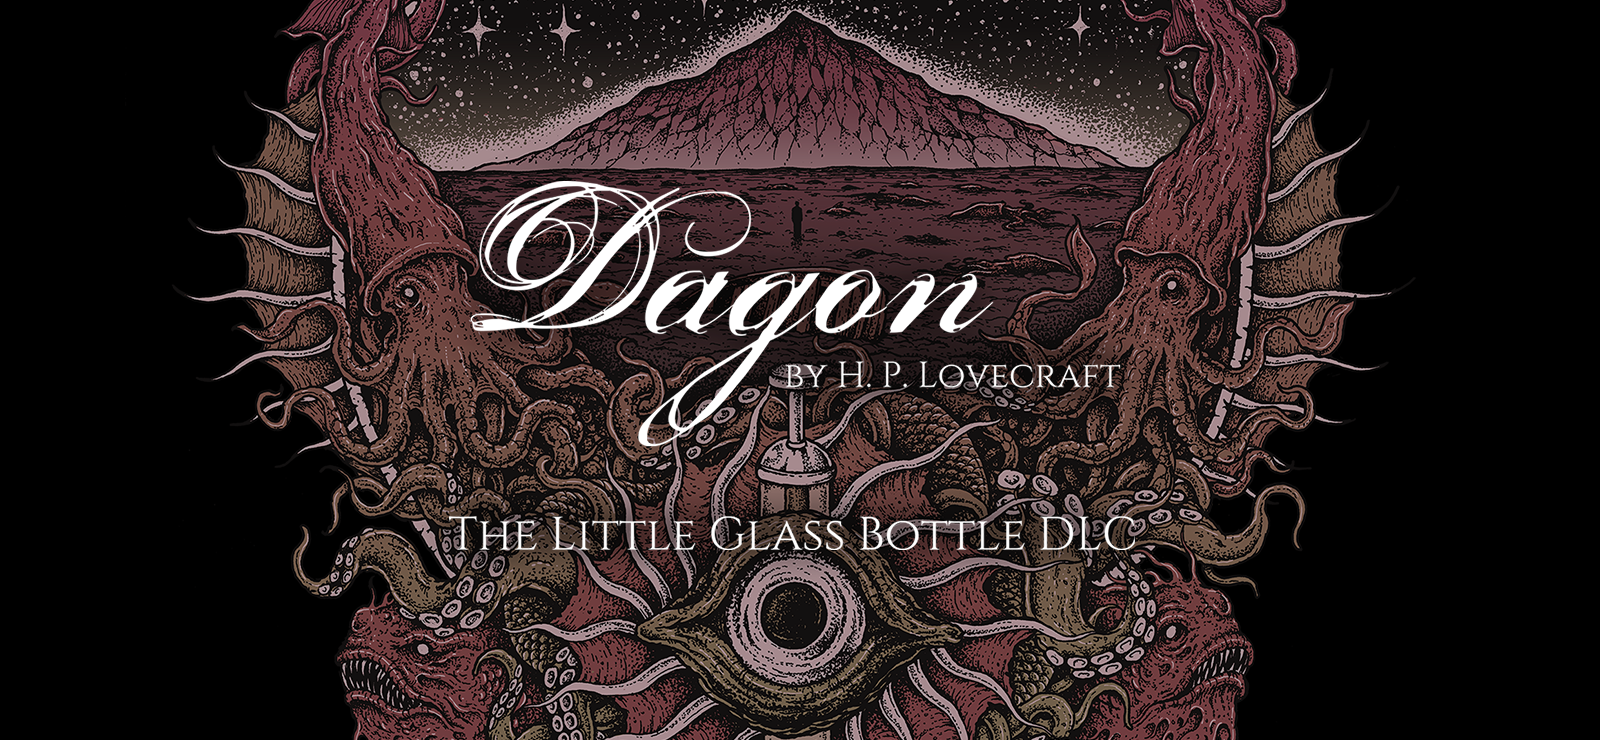 Dagon - The Little Glass Bottle DLC